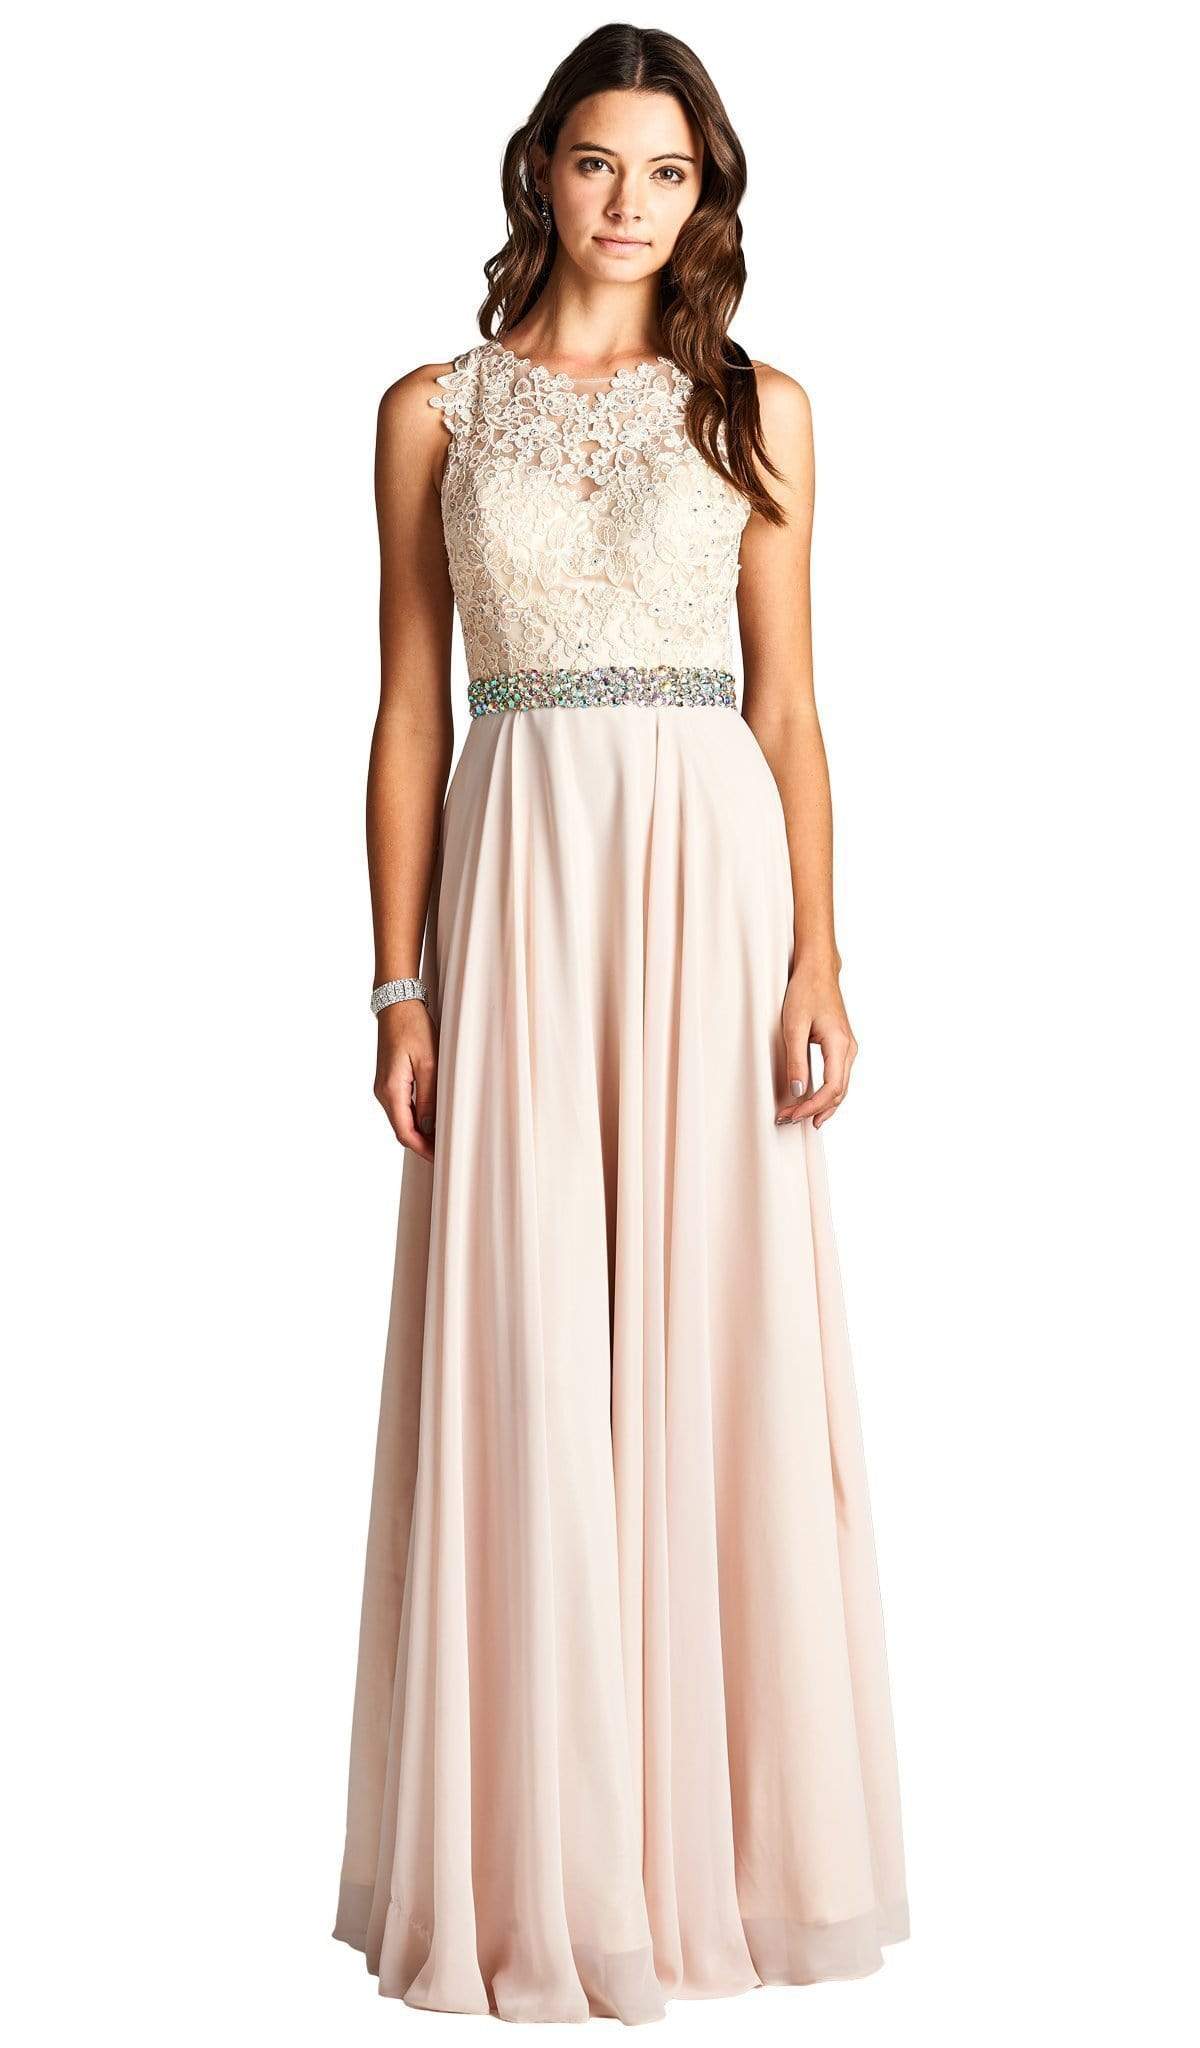 Aspeed Design - Floral Lace Jeweled Evening Dress
